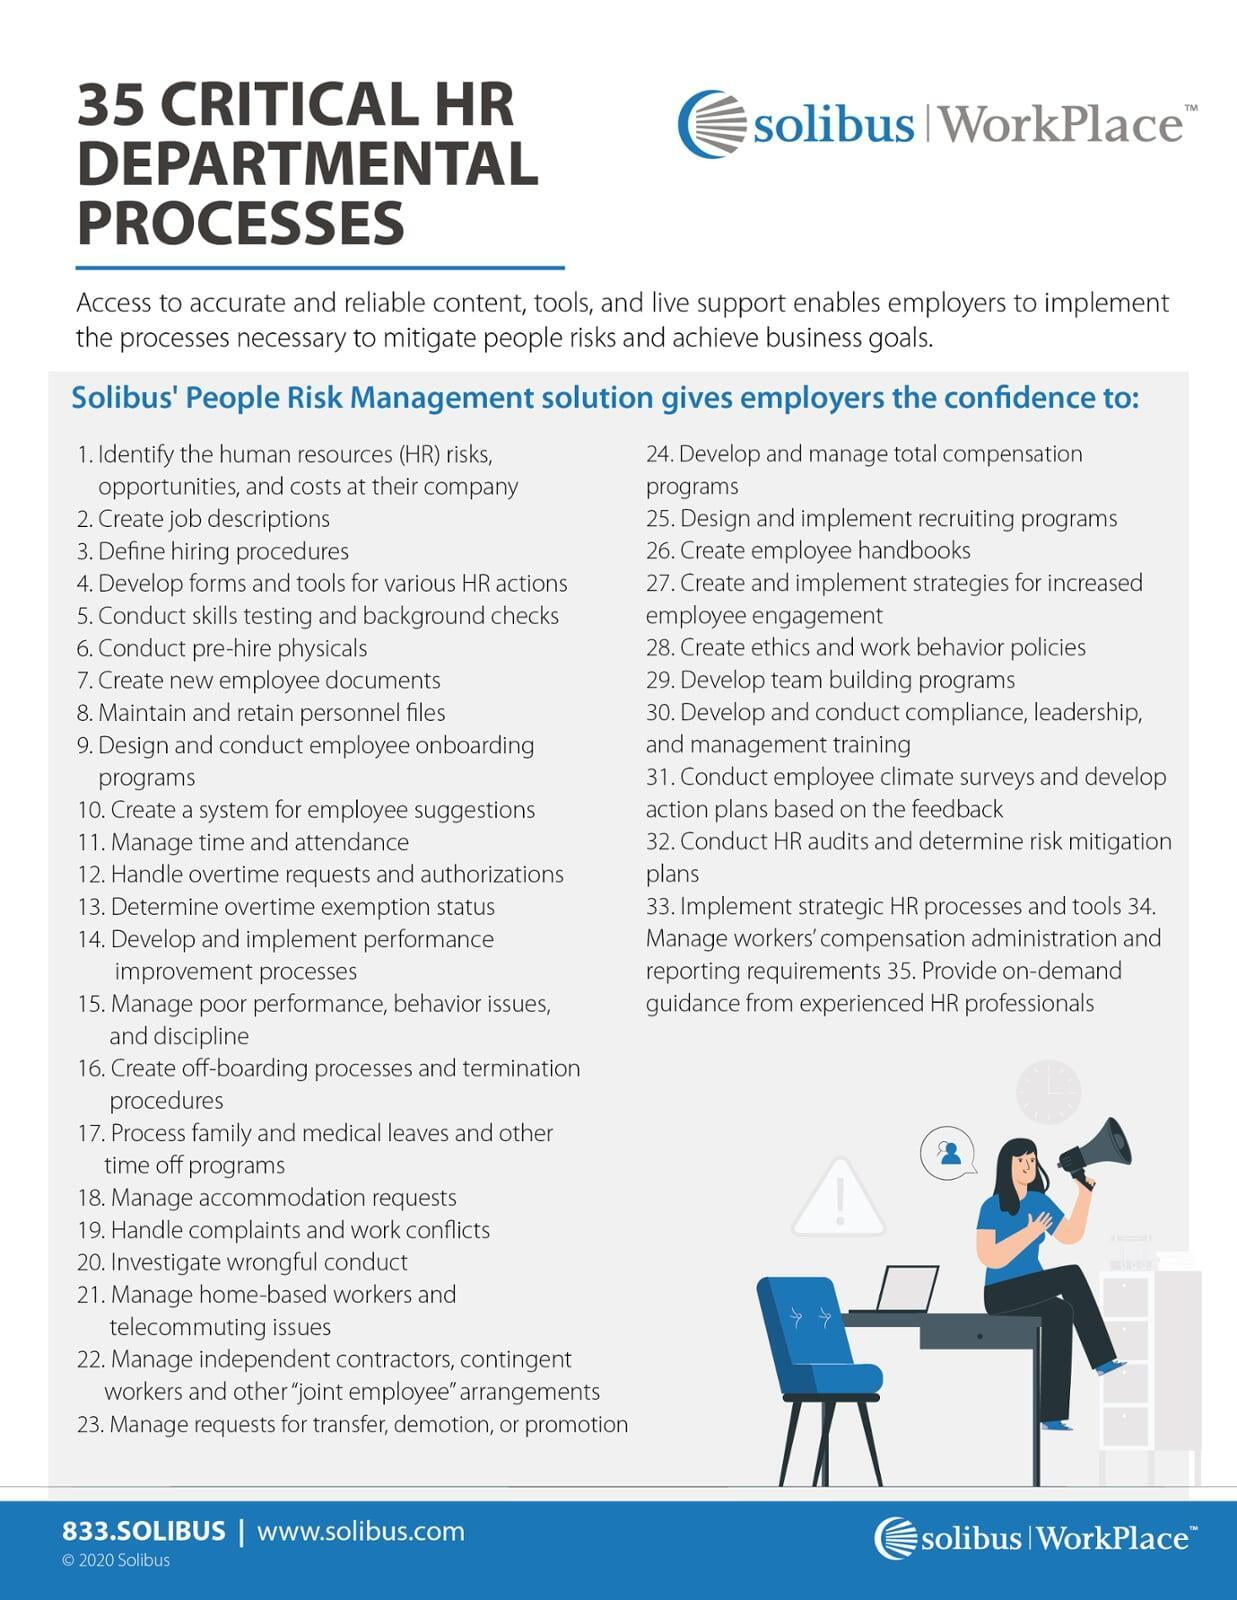 35 Critical HR Departmental Processes